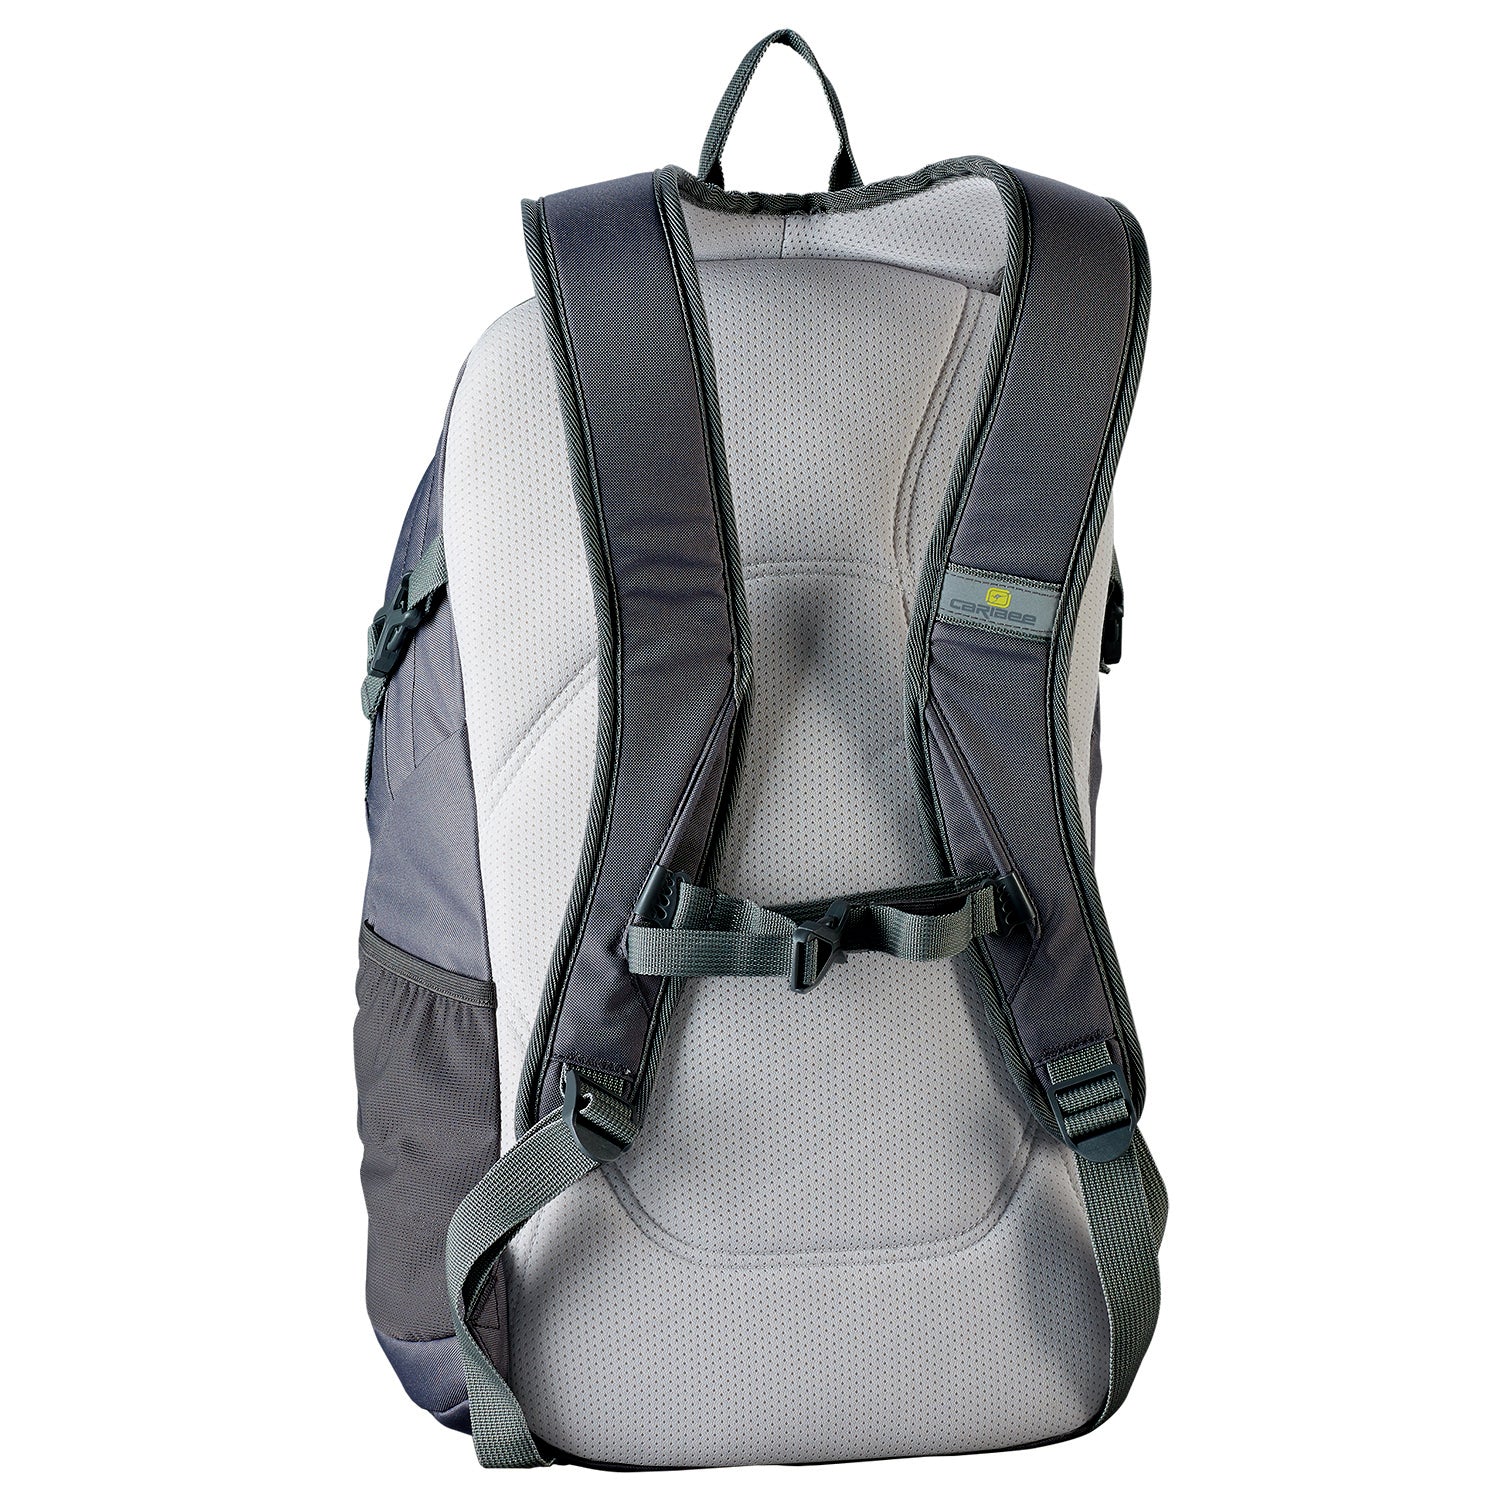 Caribee Disruption backpack sulphur spring harness system